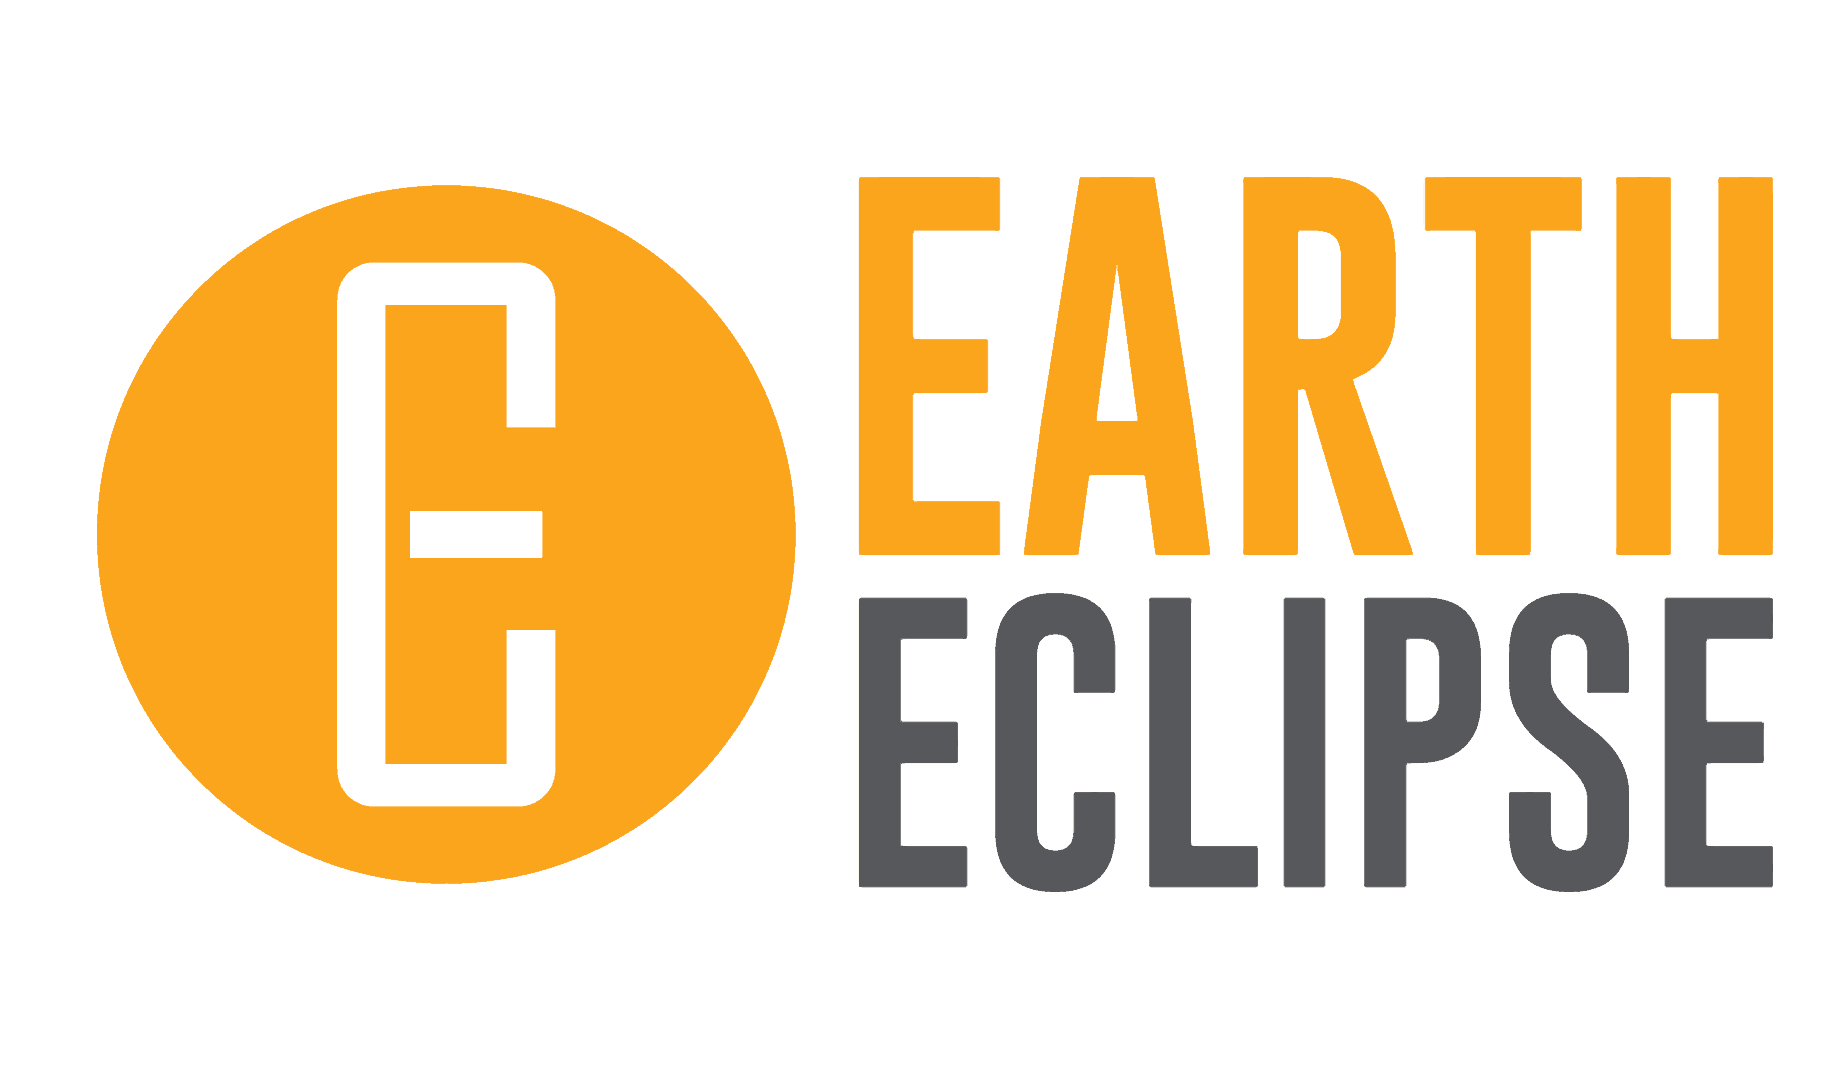 Earth Eclipse